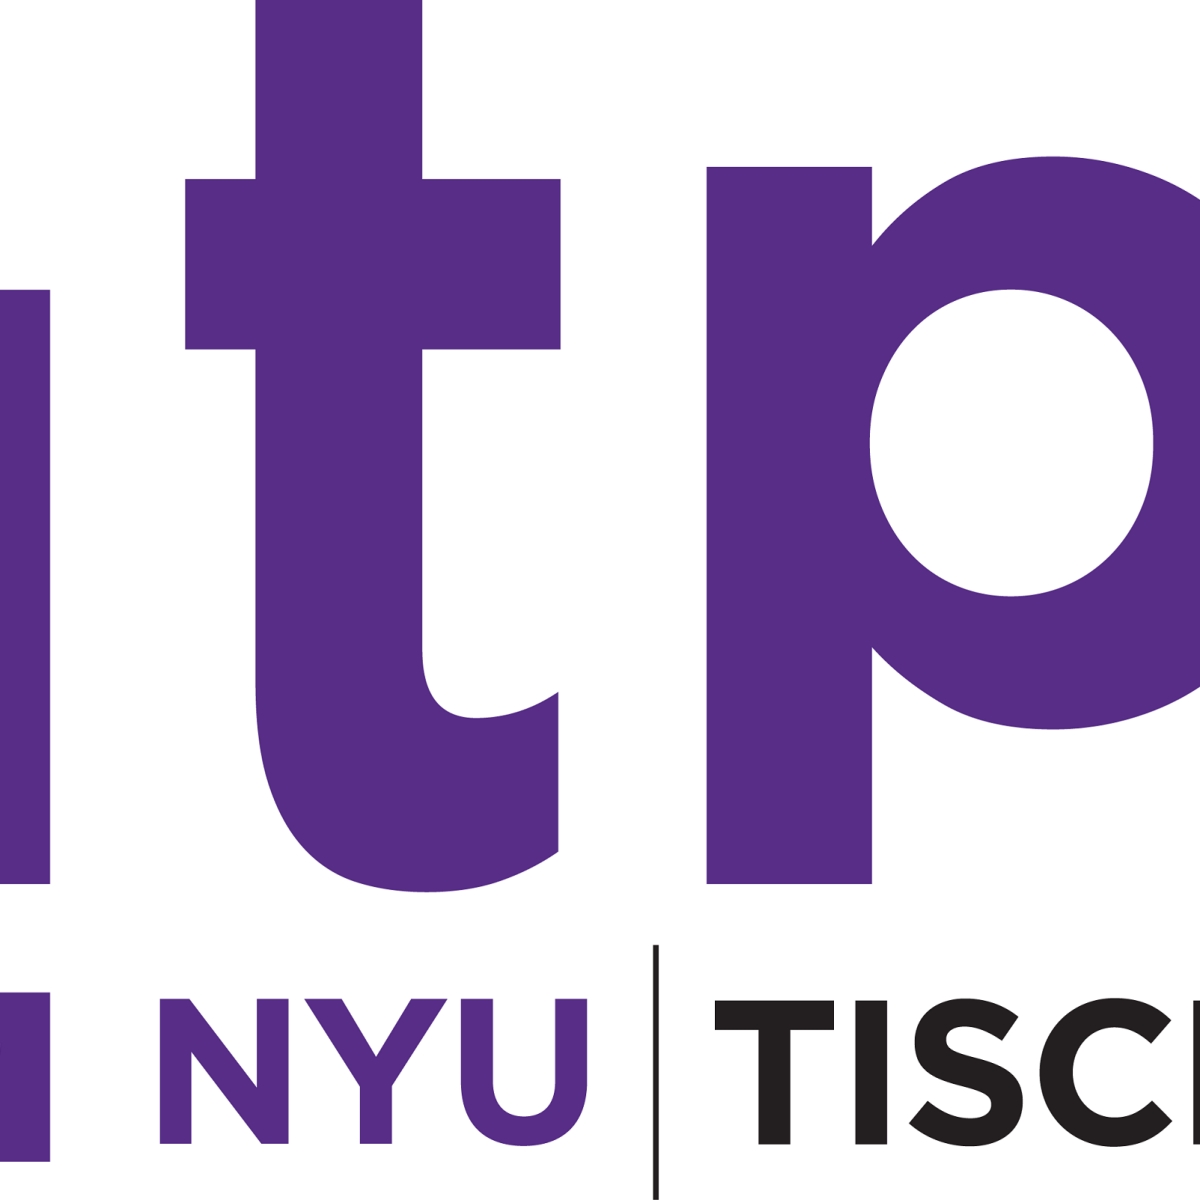 Image of ITP NYU Tisch written in purple and black.